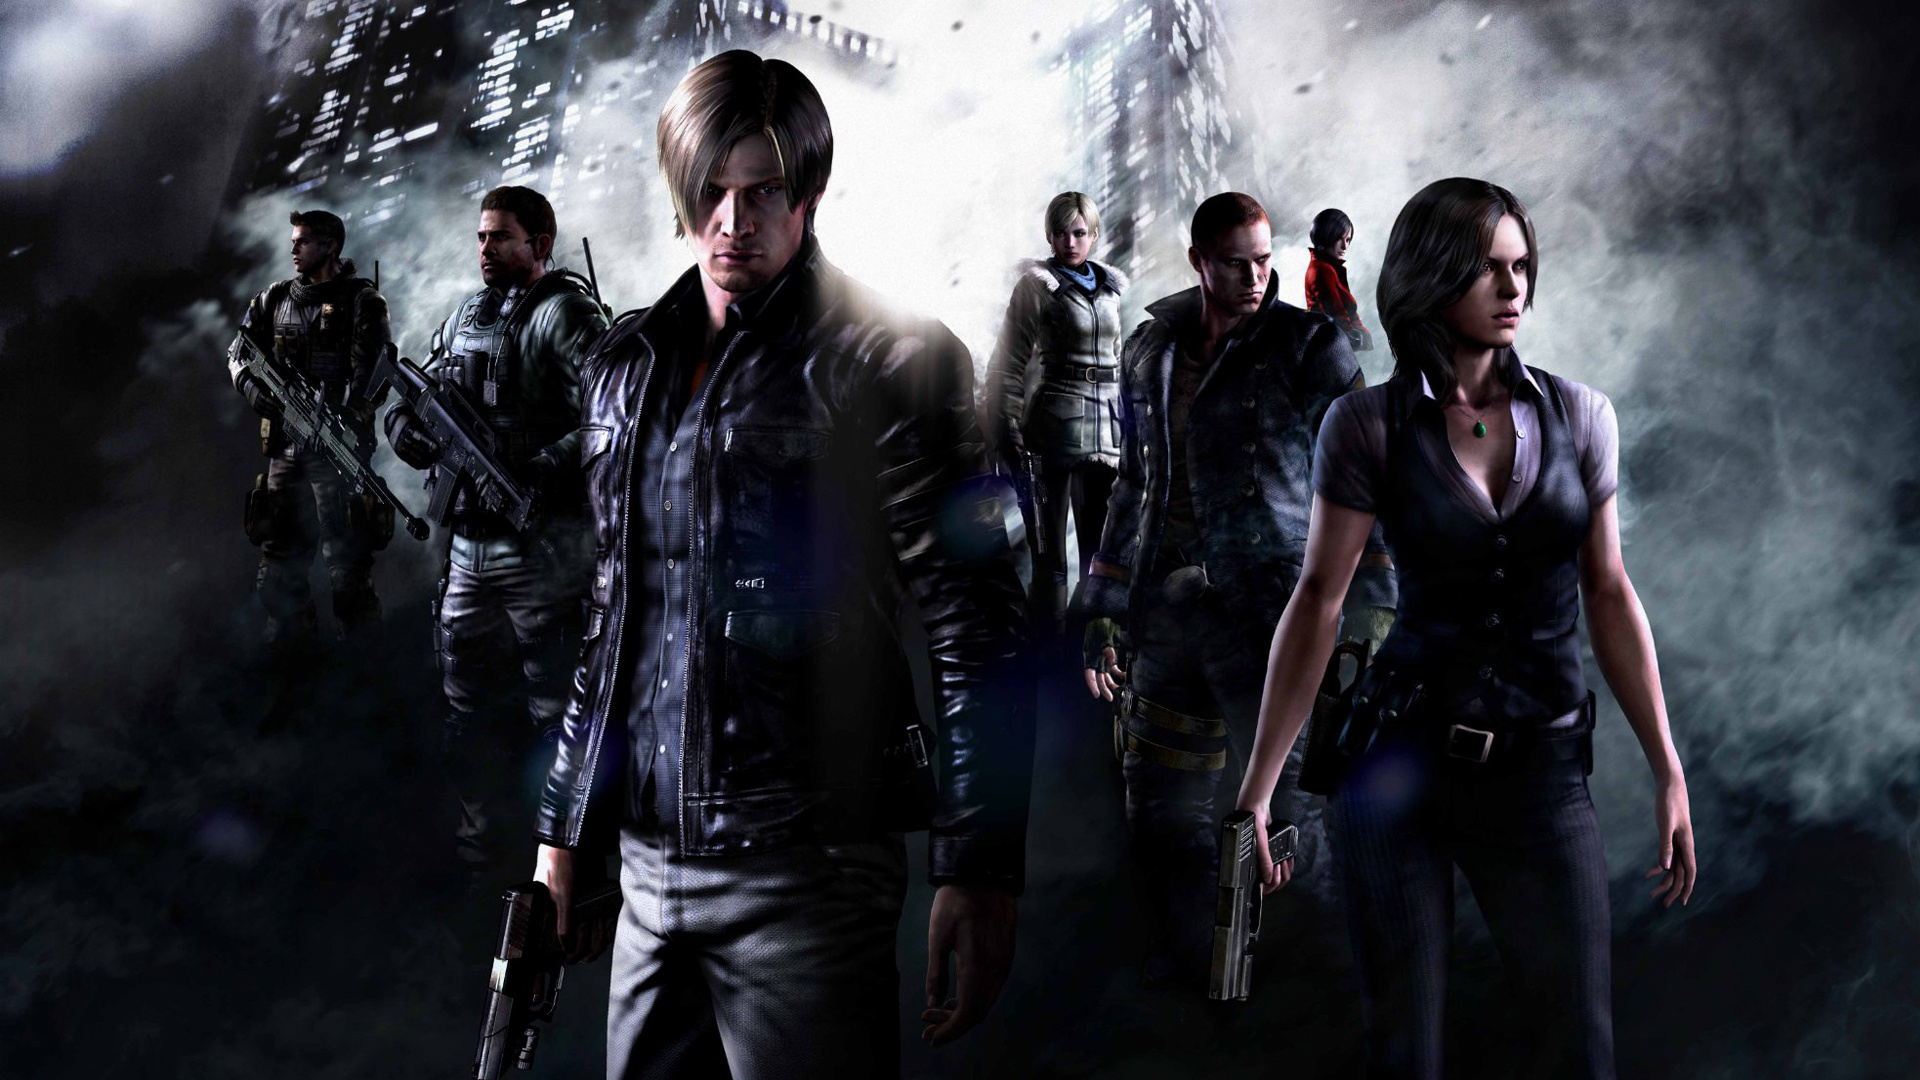 Resident Evil 6, Mod DB, Intense images, Action-packed, 1920x1080 Full HD Desktop